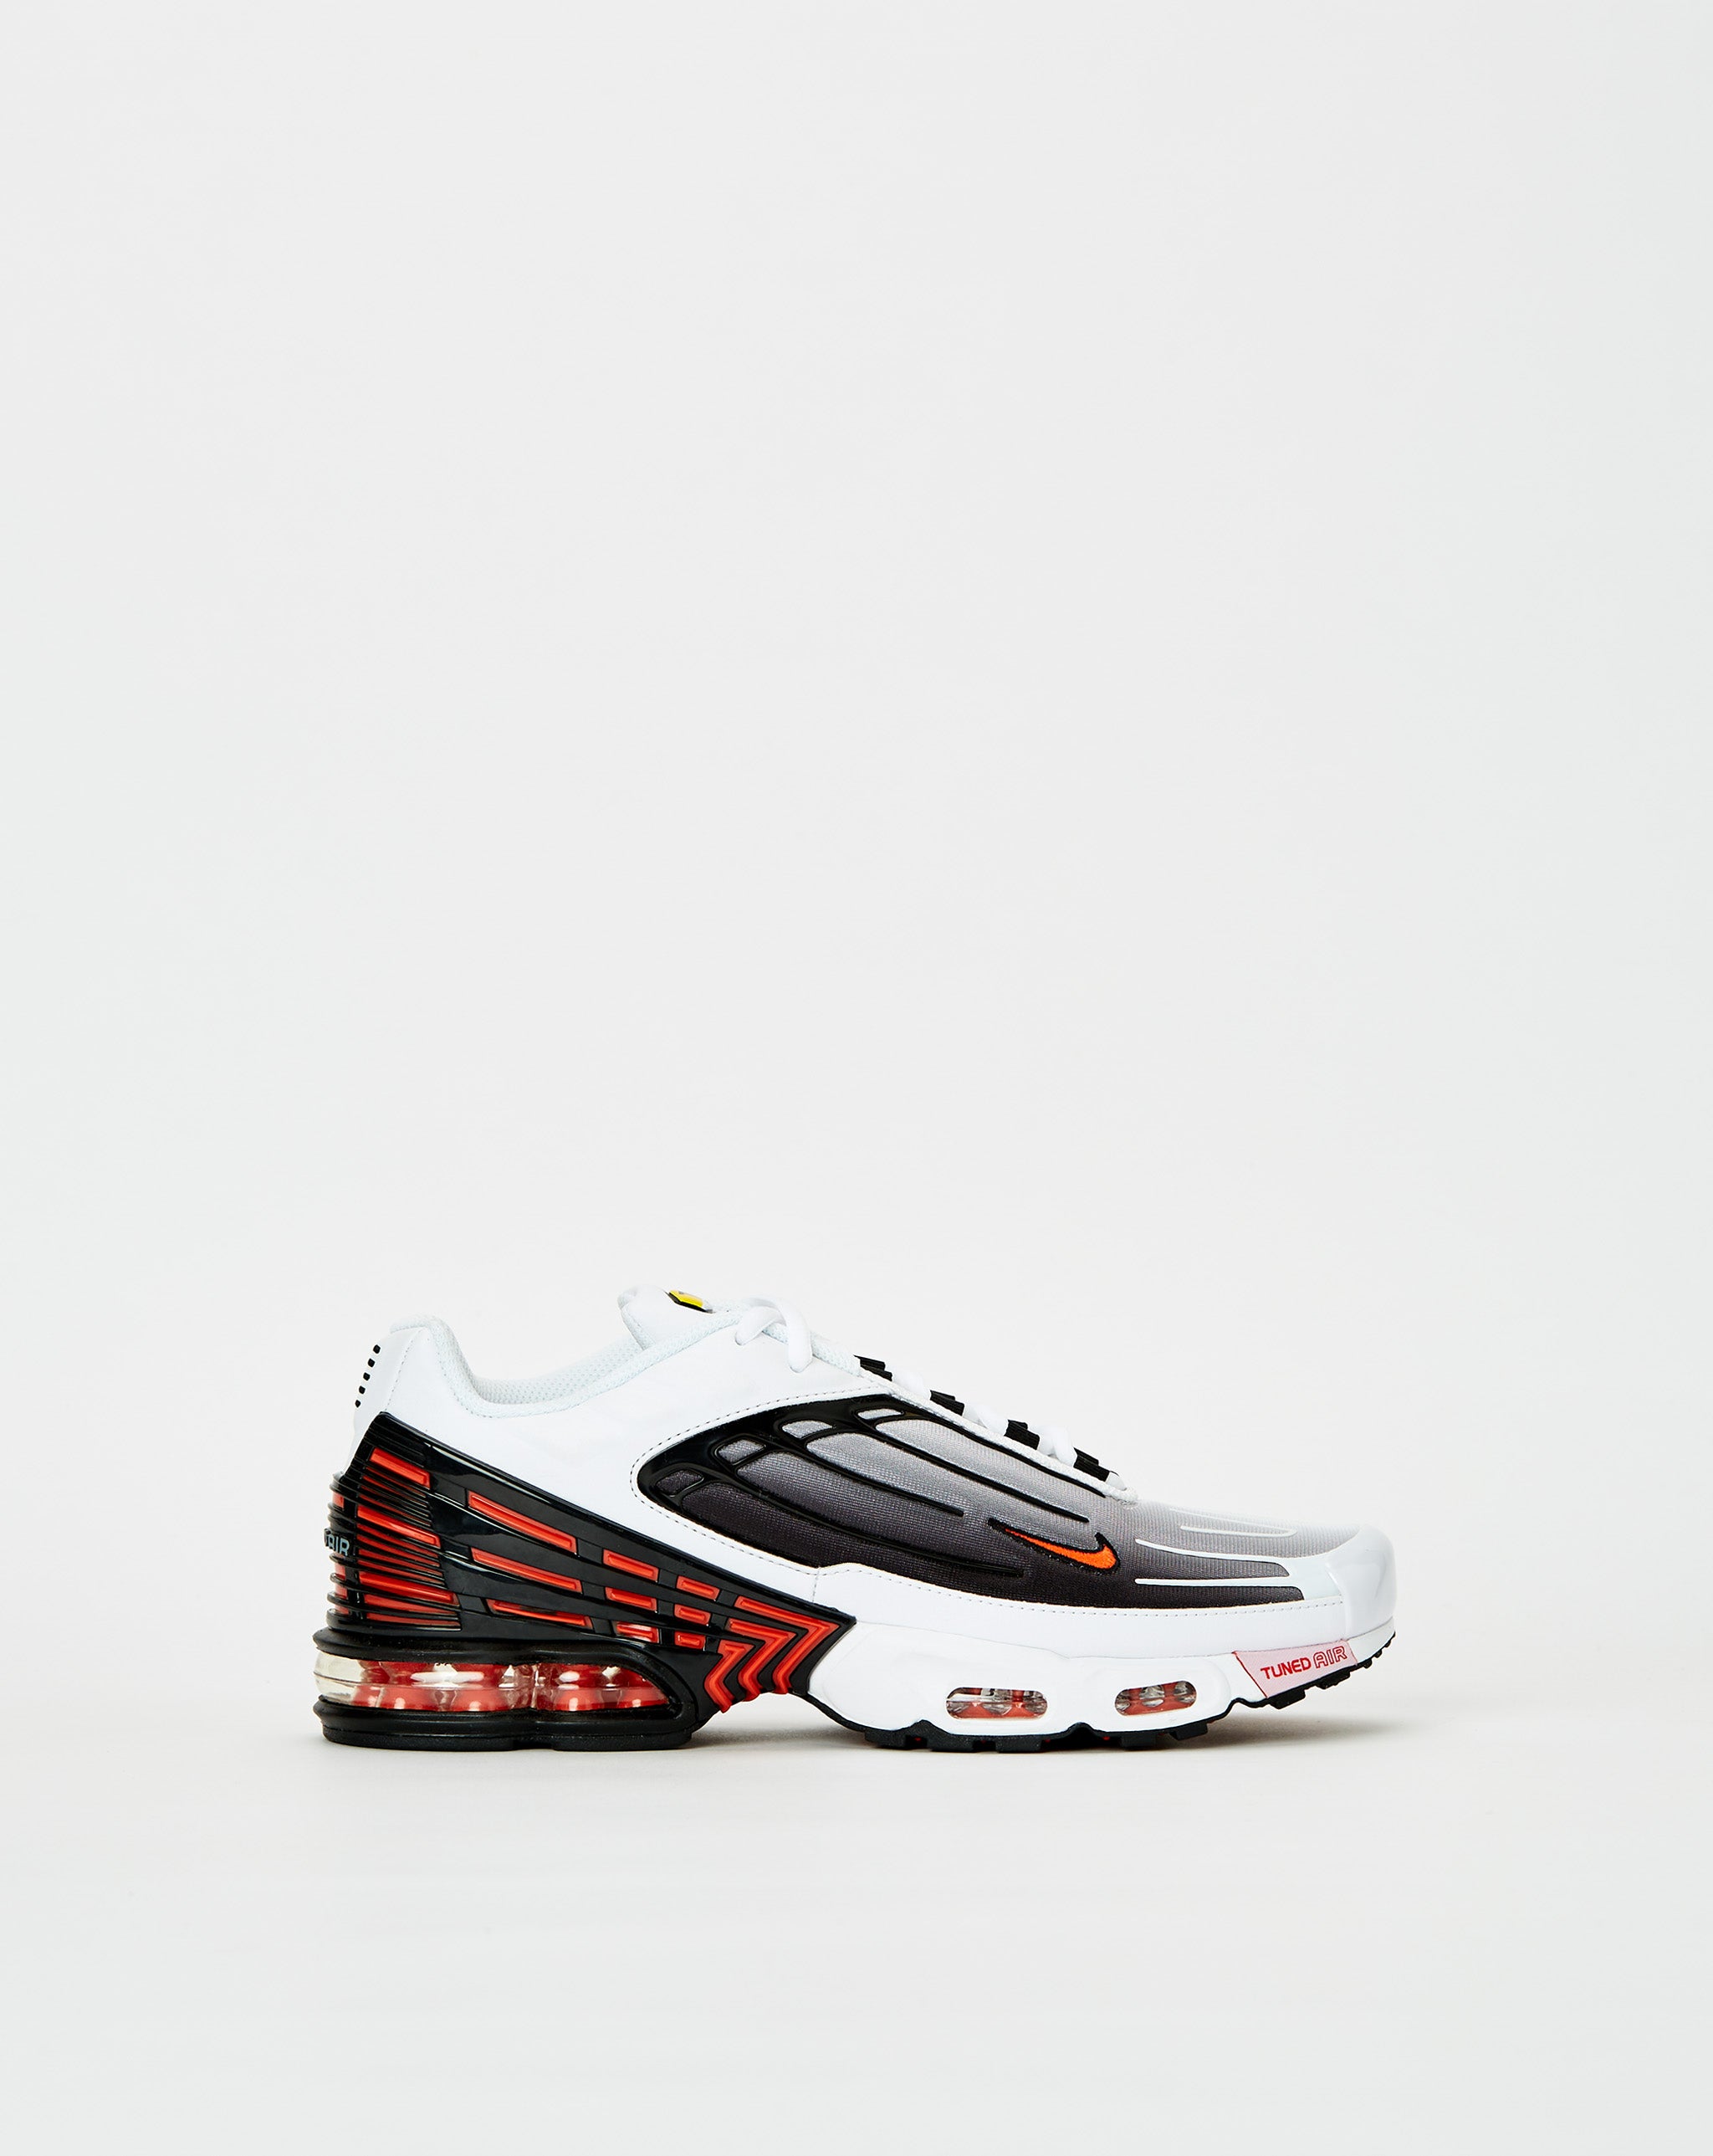 Nike Lakai cambridge ms2210252a00 mens white suede skate inspired sneakers shoes 12  - Cheap Urlfreeze Jordan outlet